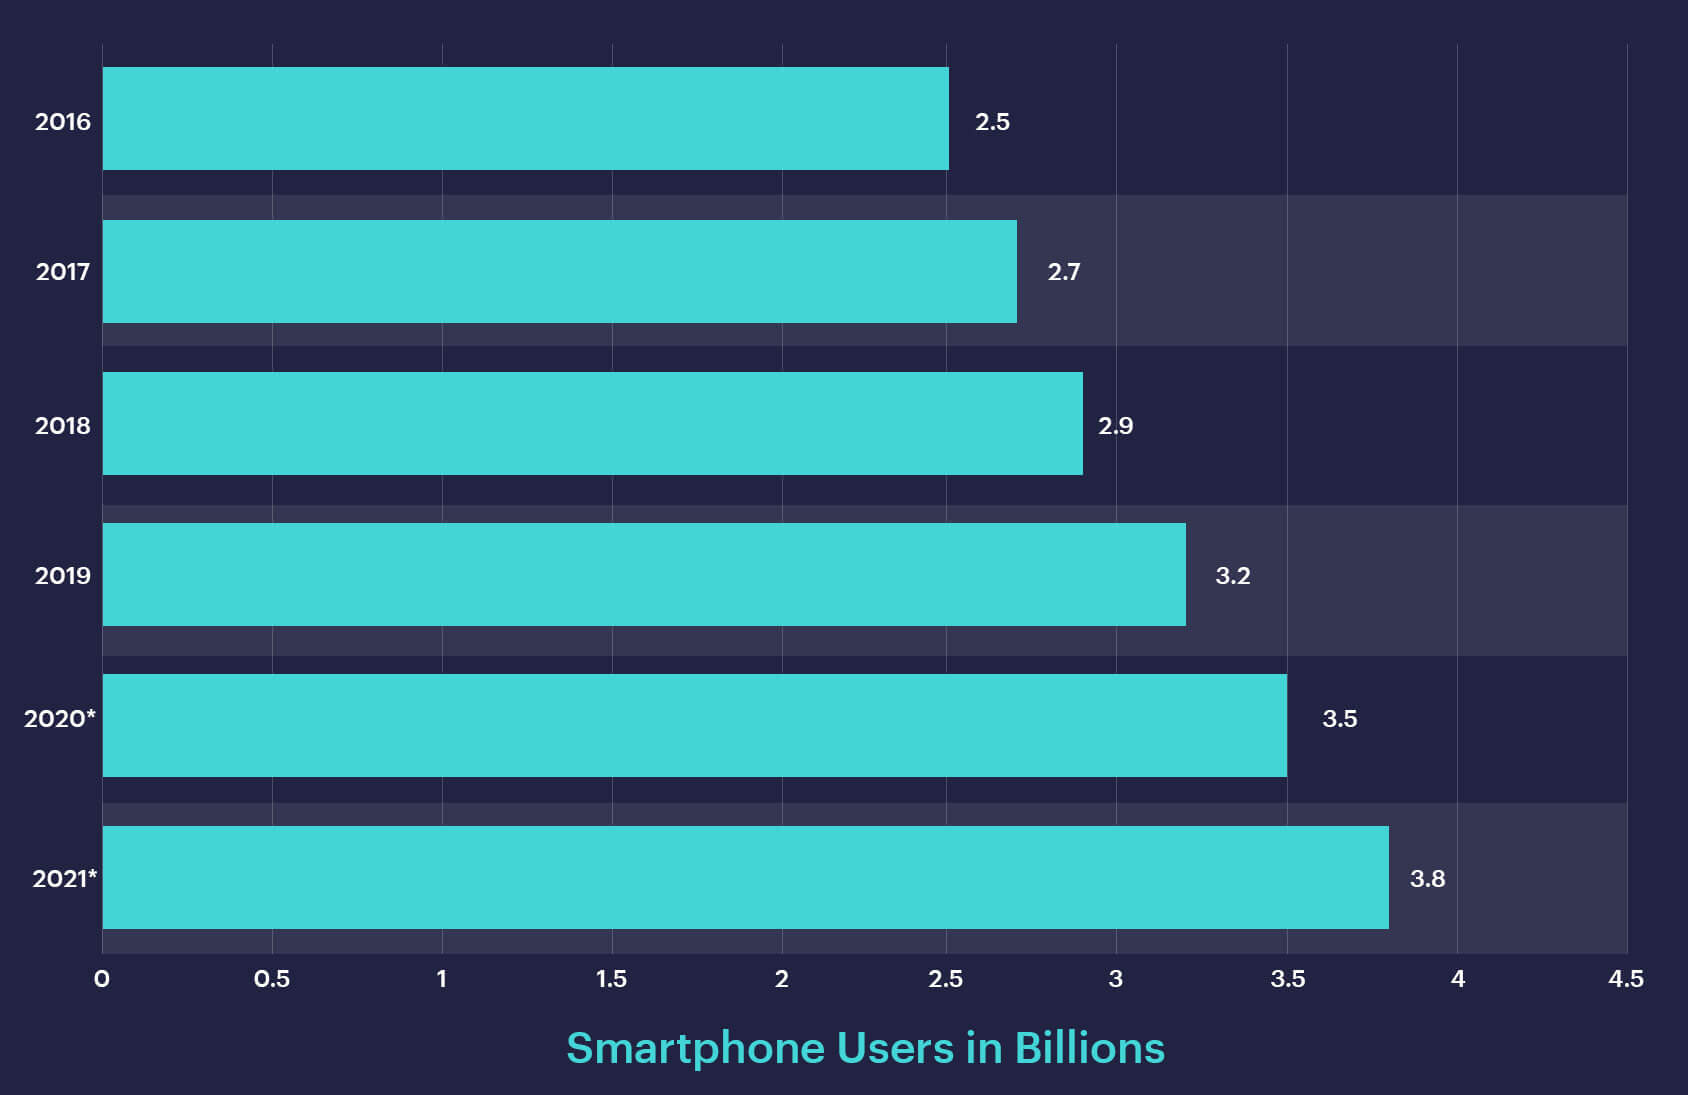 Smartphone users survey